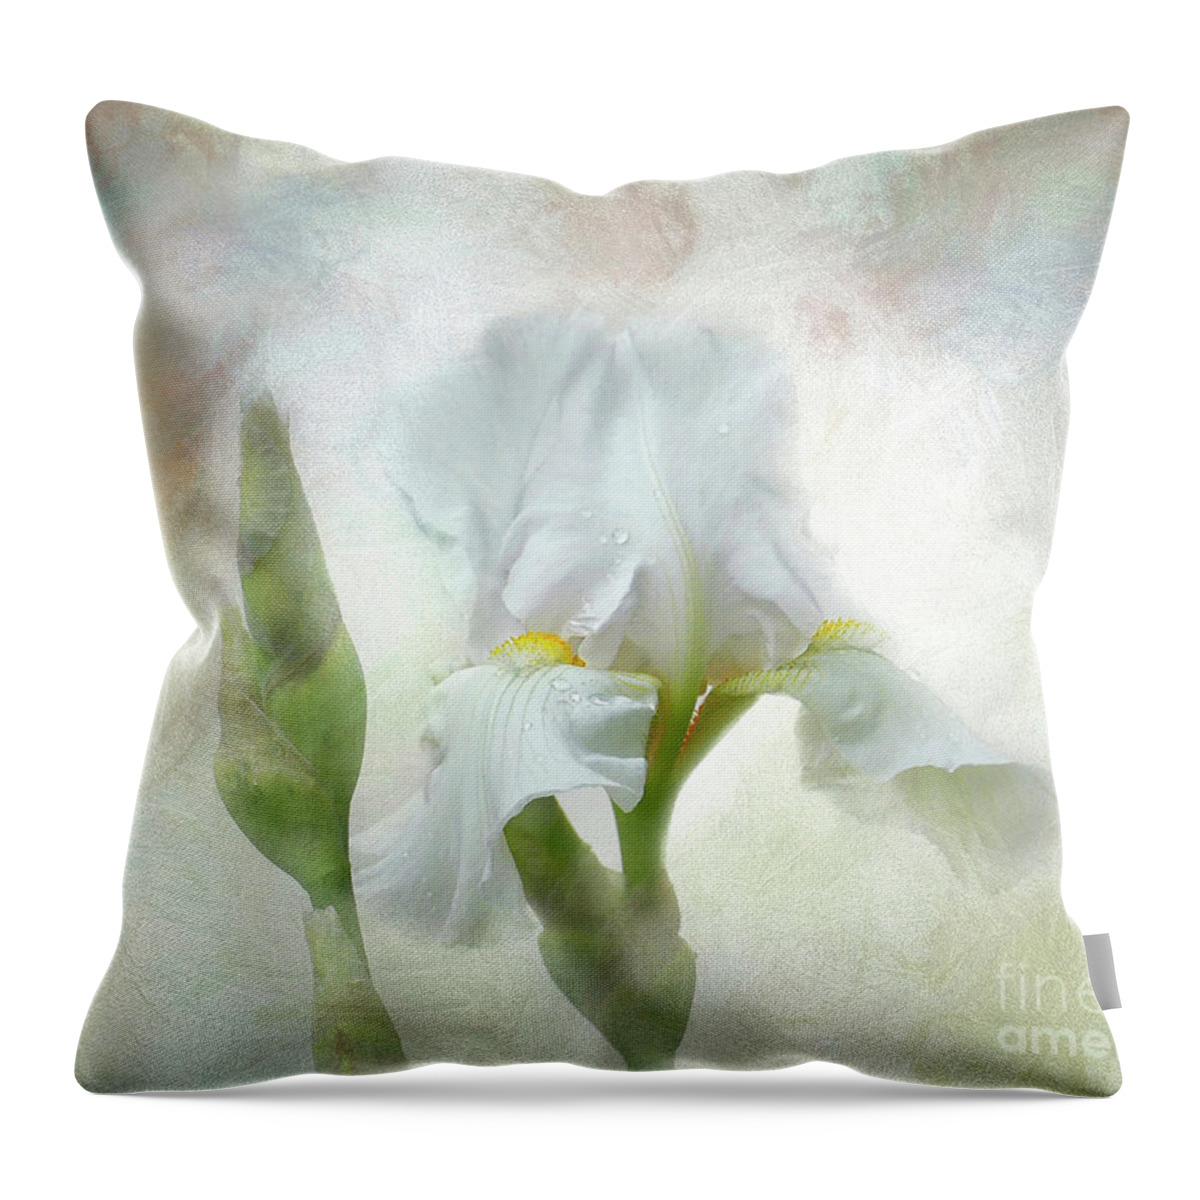 Iris Throw Pillow featuring the digital art Artistic White Iris by Amy Dundon